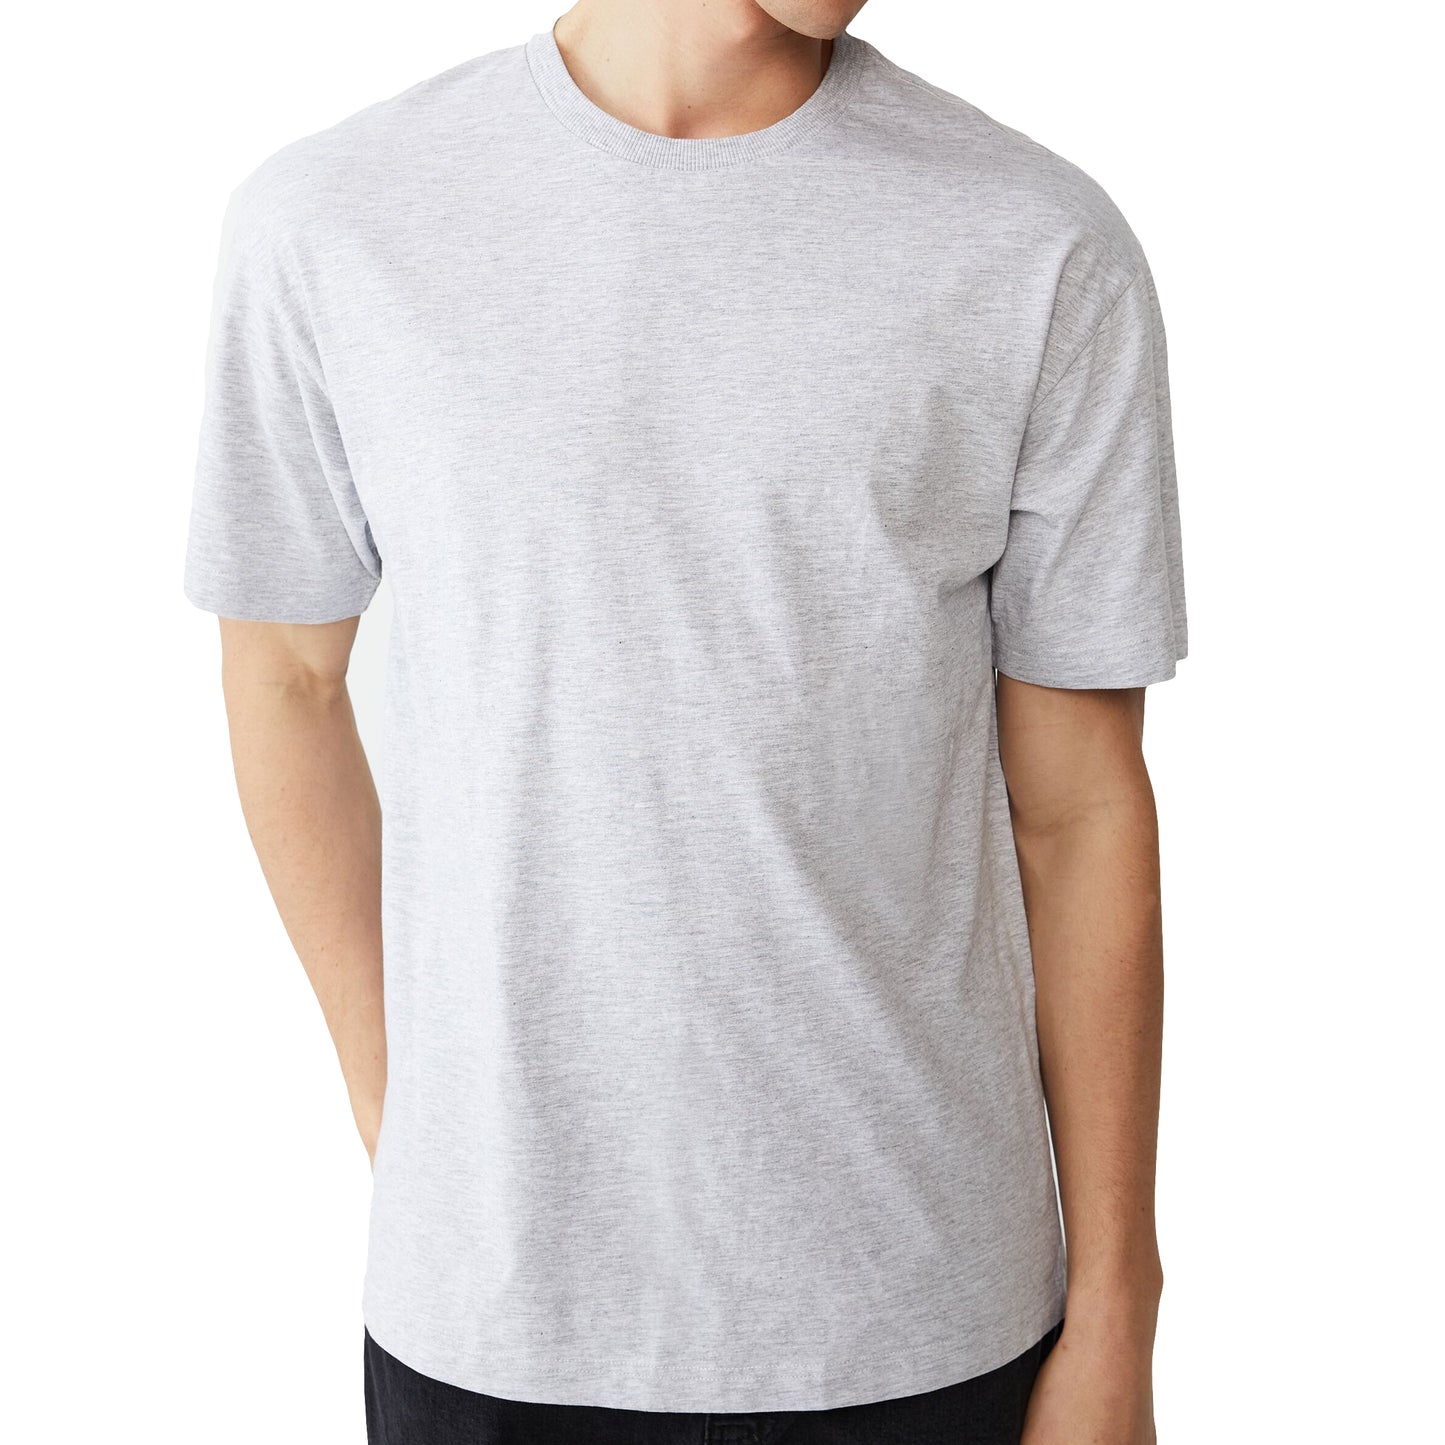 Adult 100% Cotton T-Shirt Unisex Men's Basic Plain Blank Crew Tee Tops Shirts, Yellow, XL